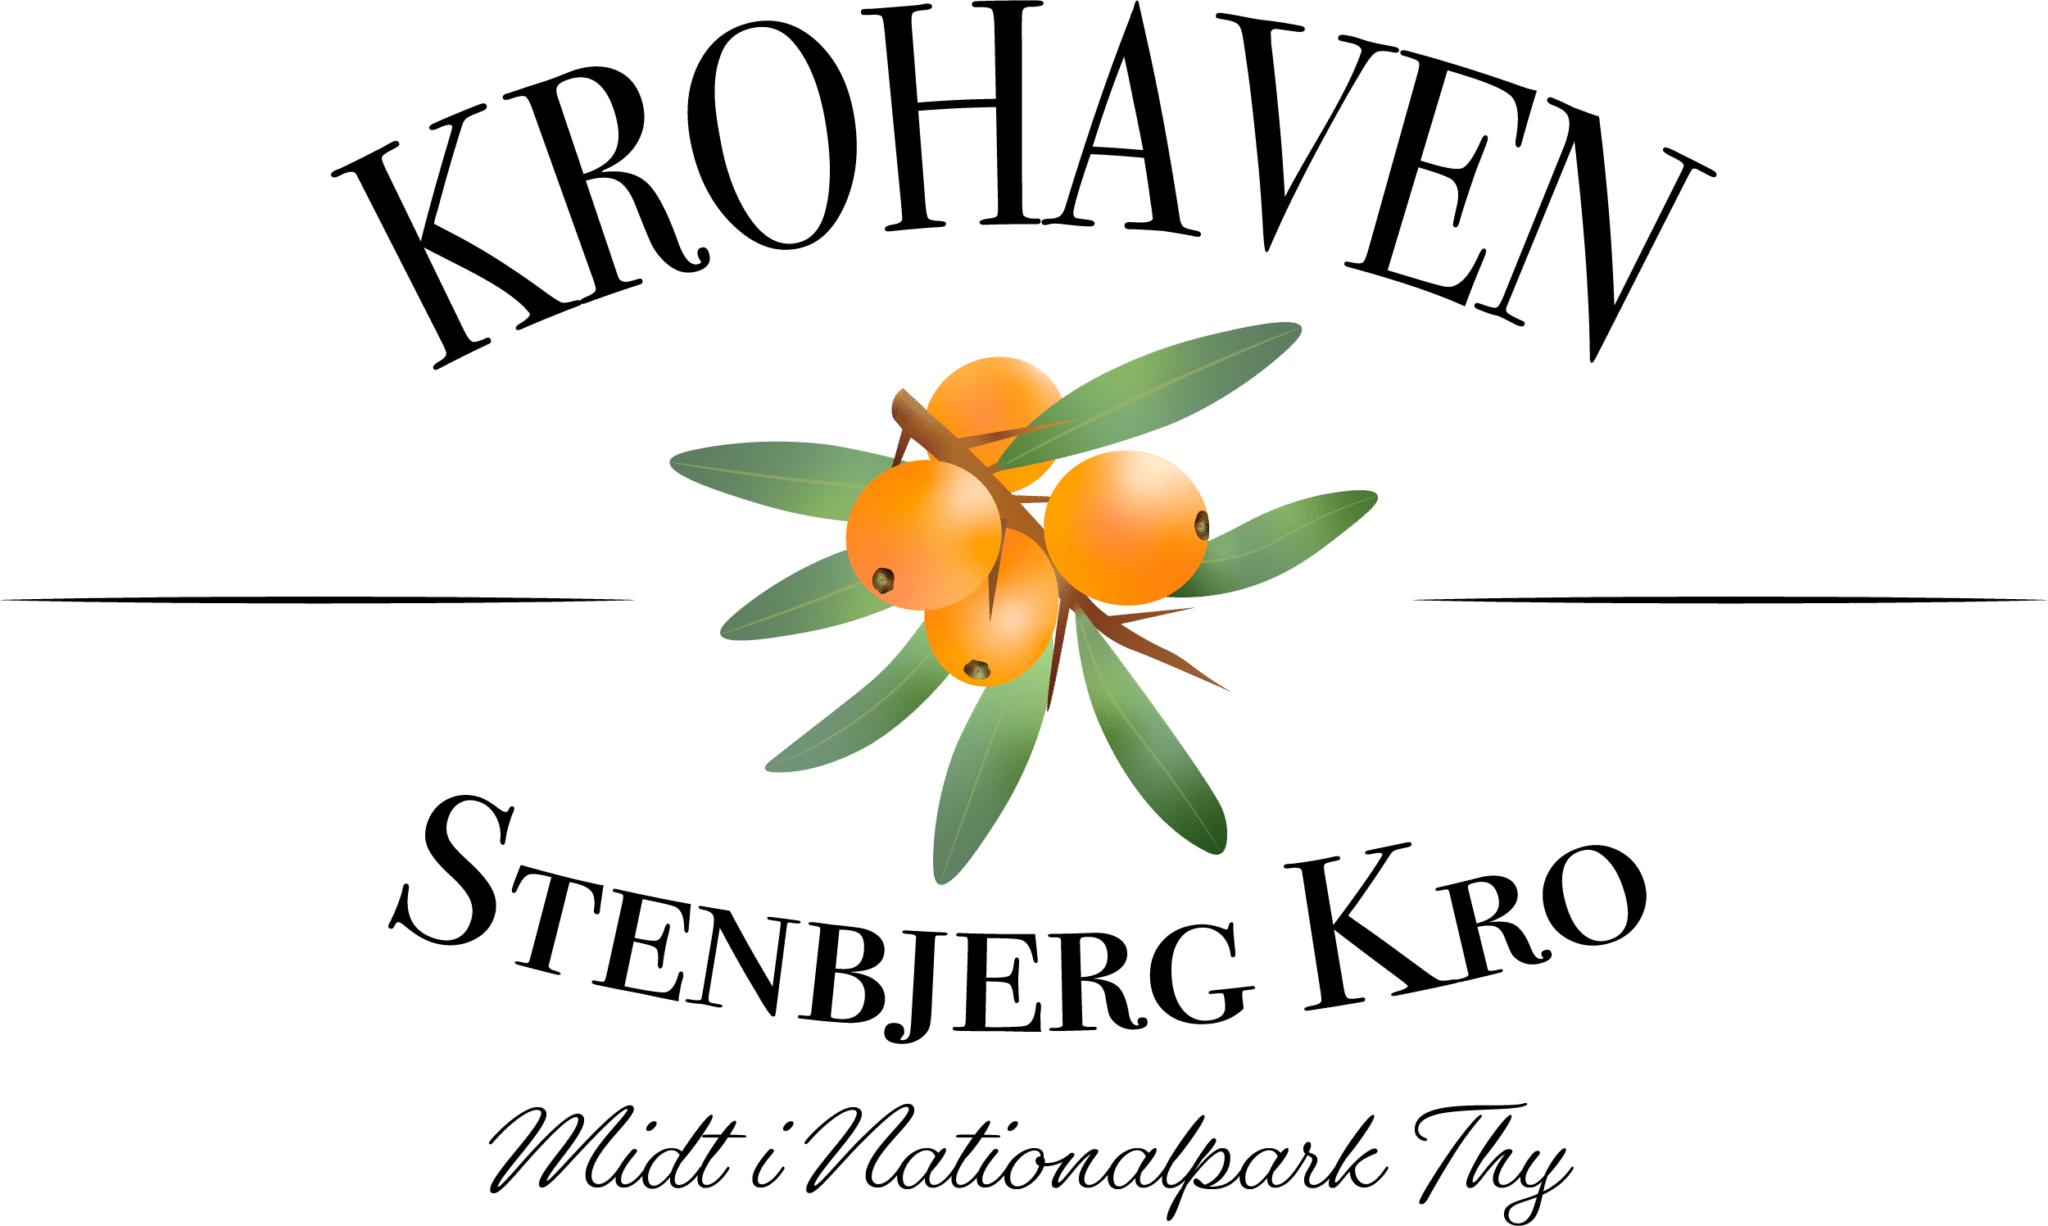 Stenbjerg Kro